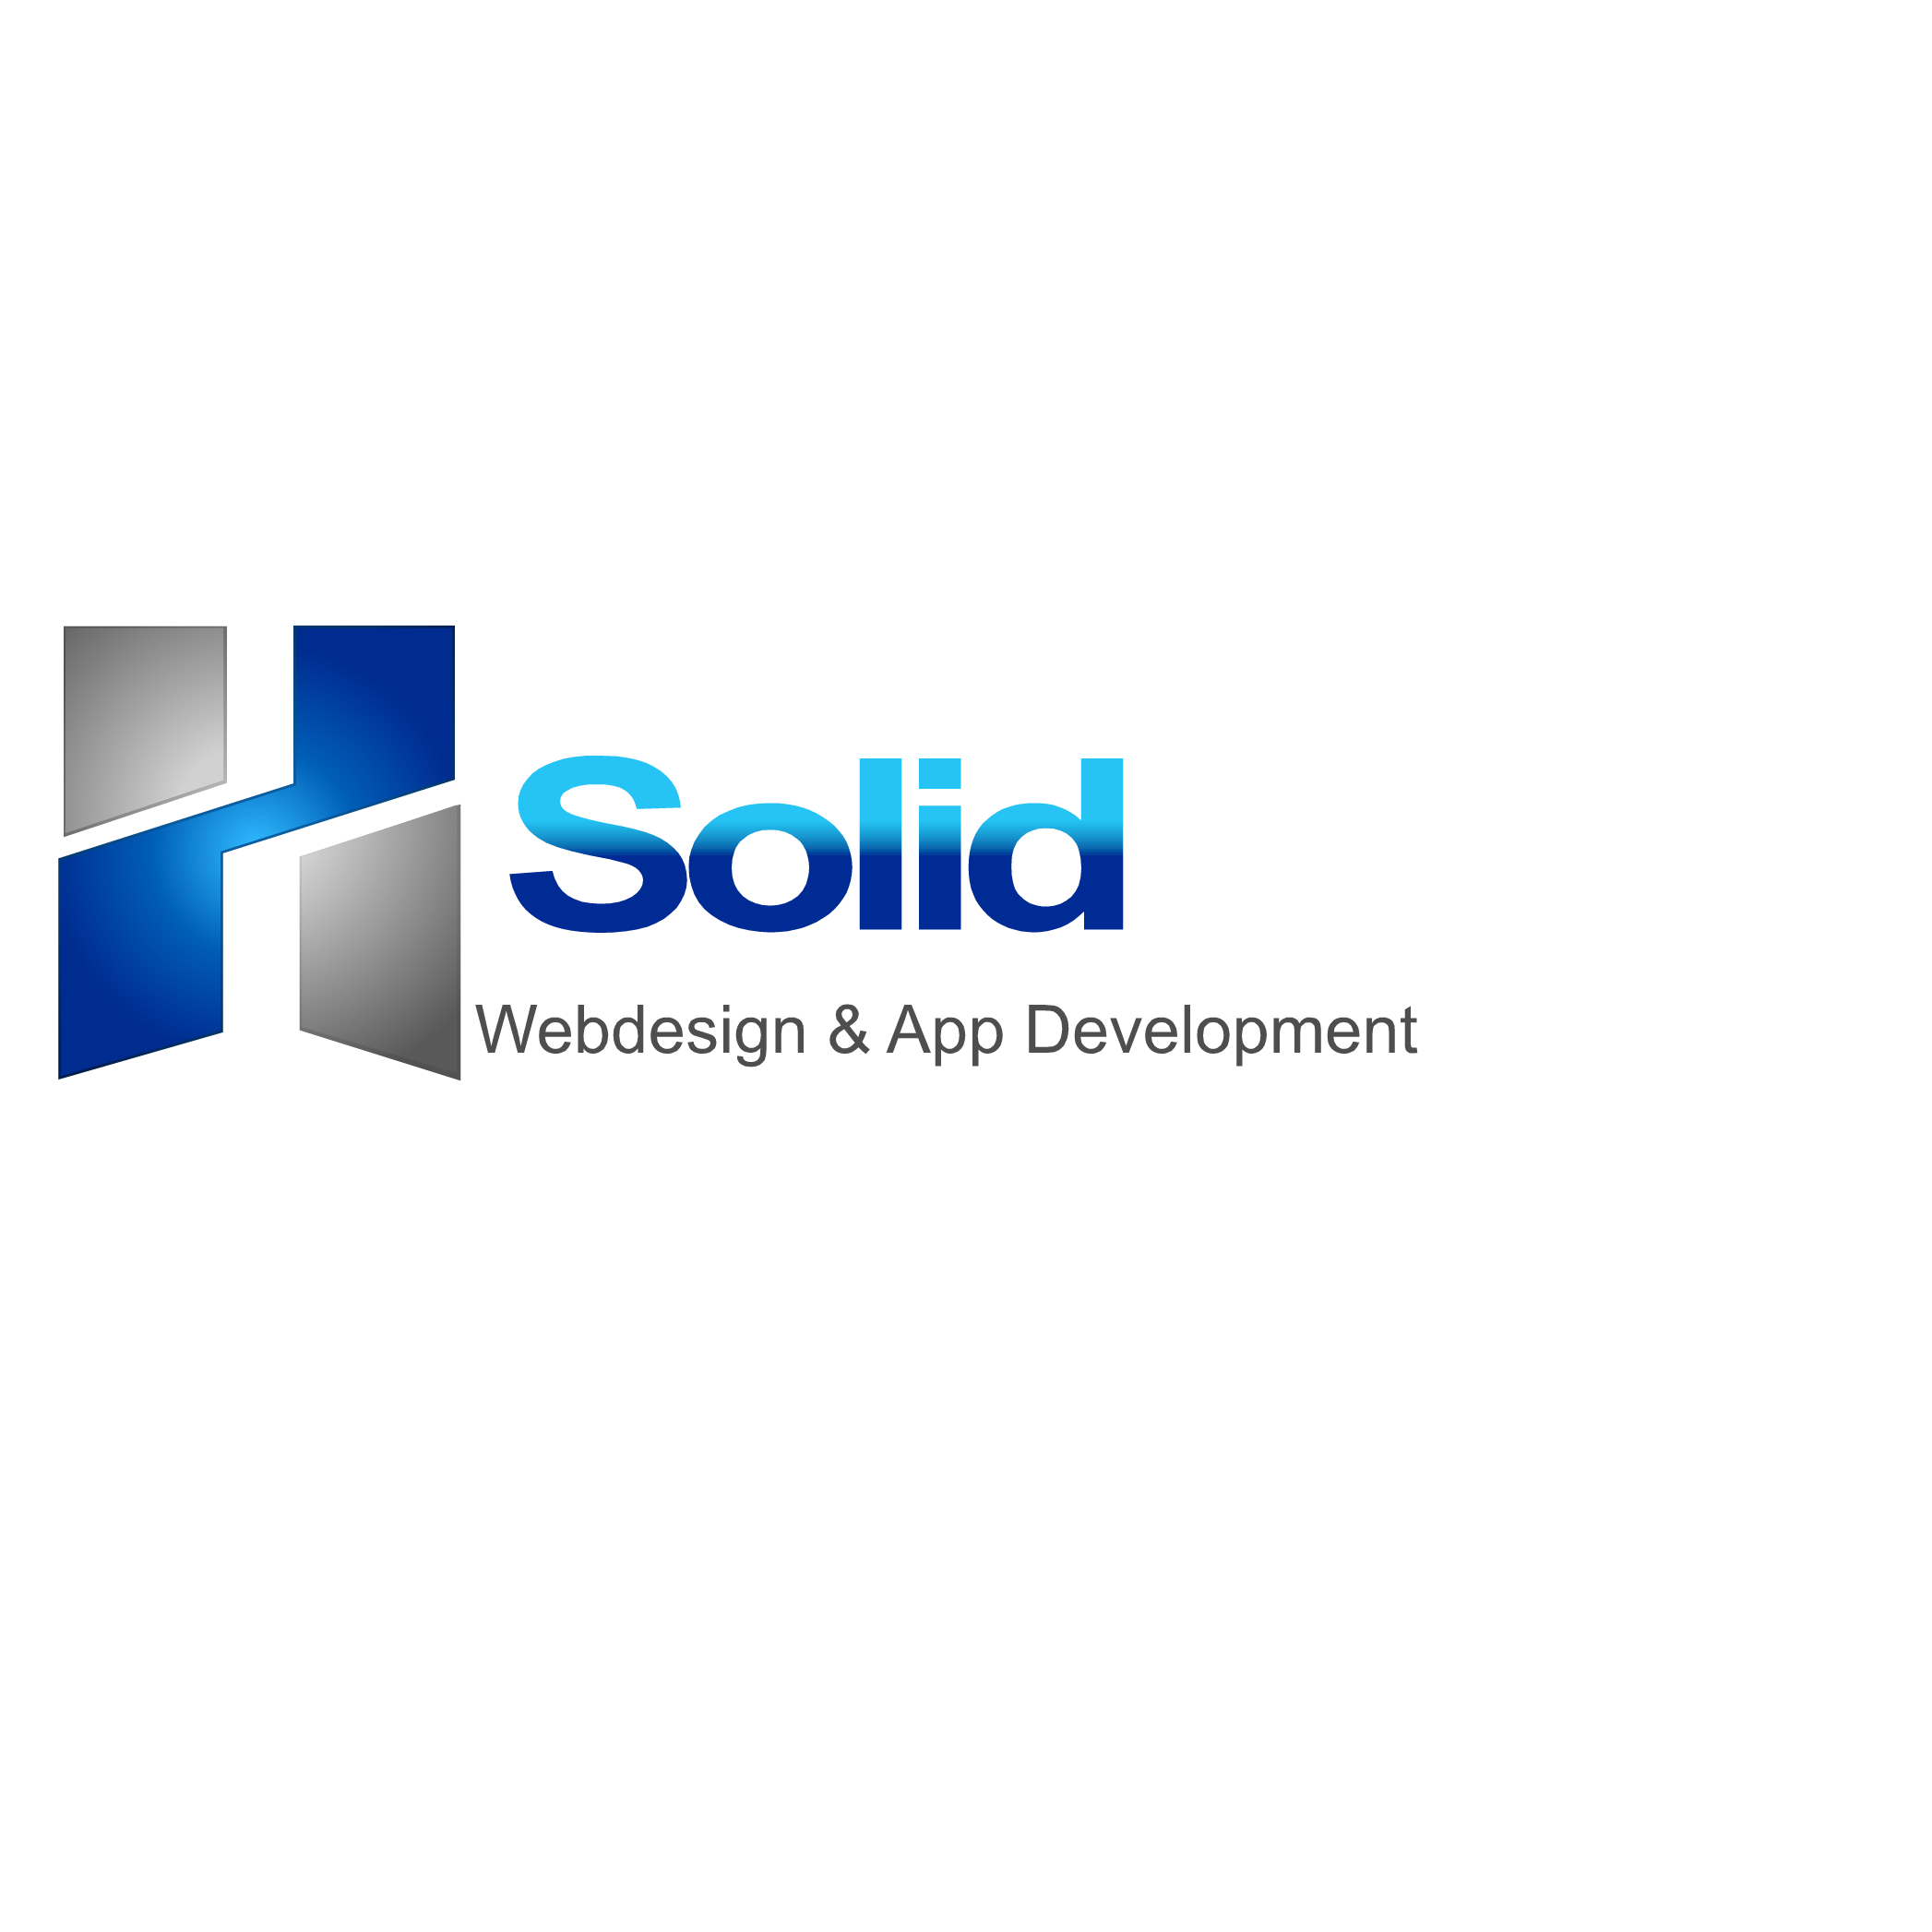 Solid Webdesign & App Development